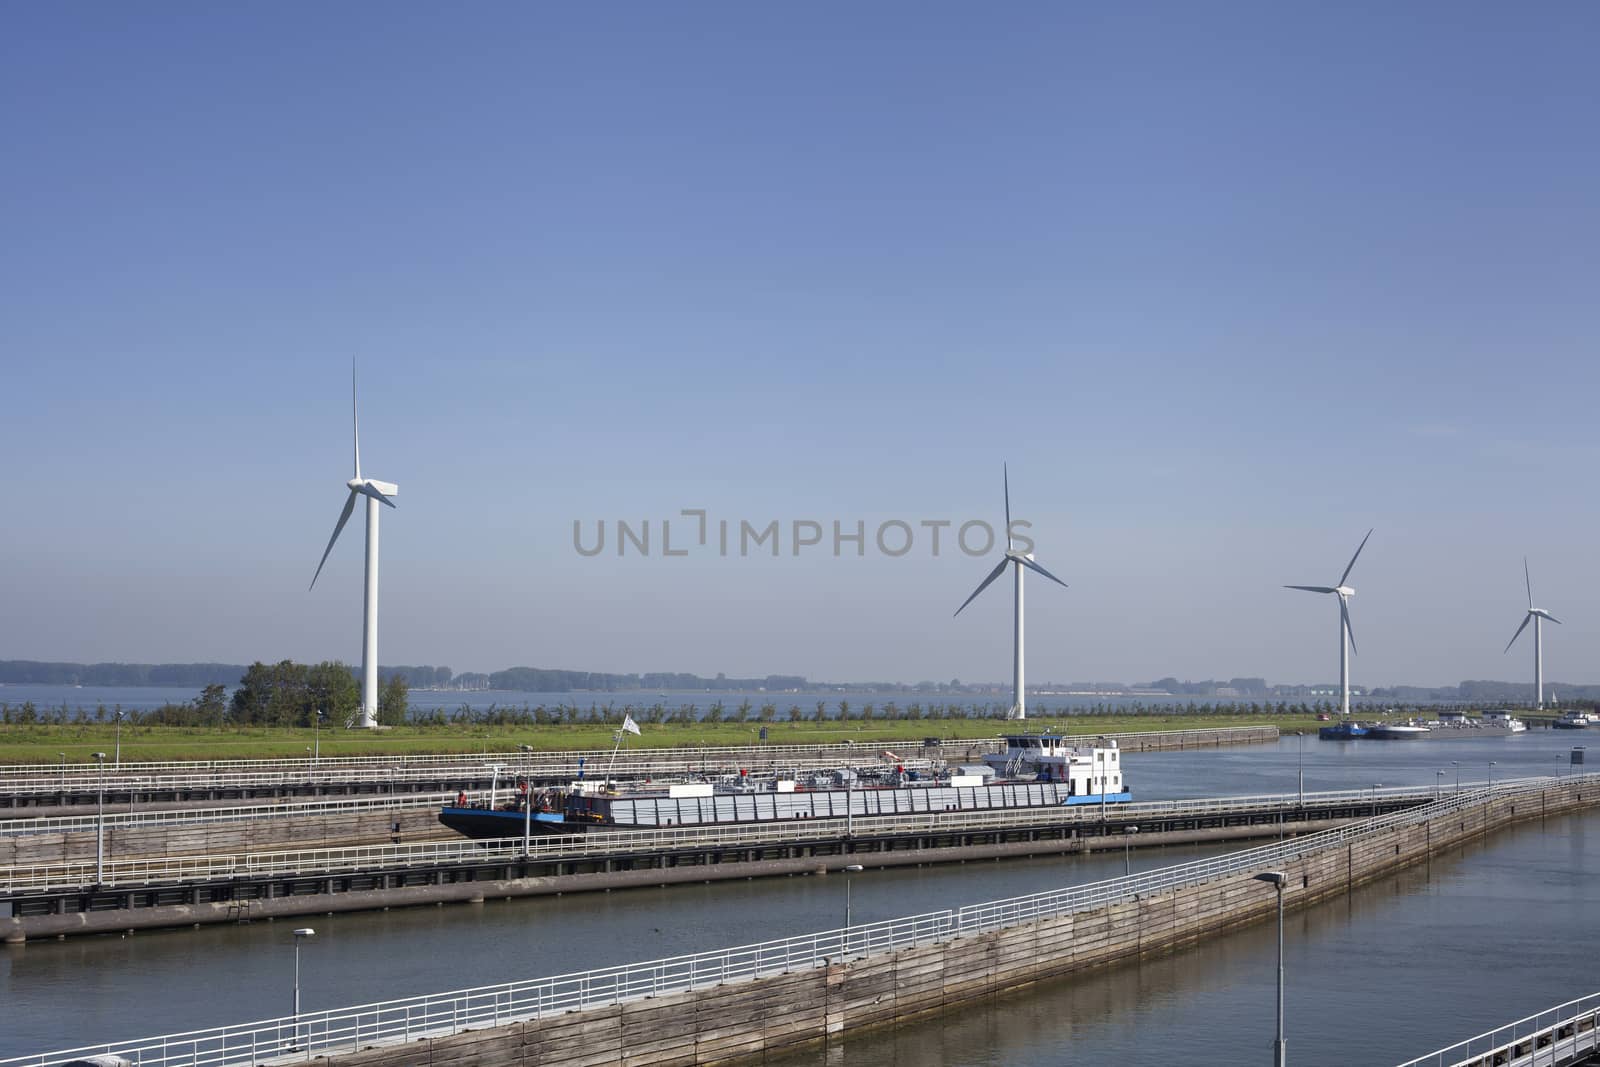 Krammersluizen lake krammer. Drone photograpy from the delta works in Zeeland in the Netherlands